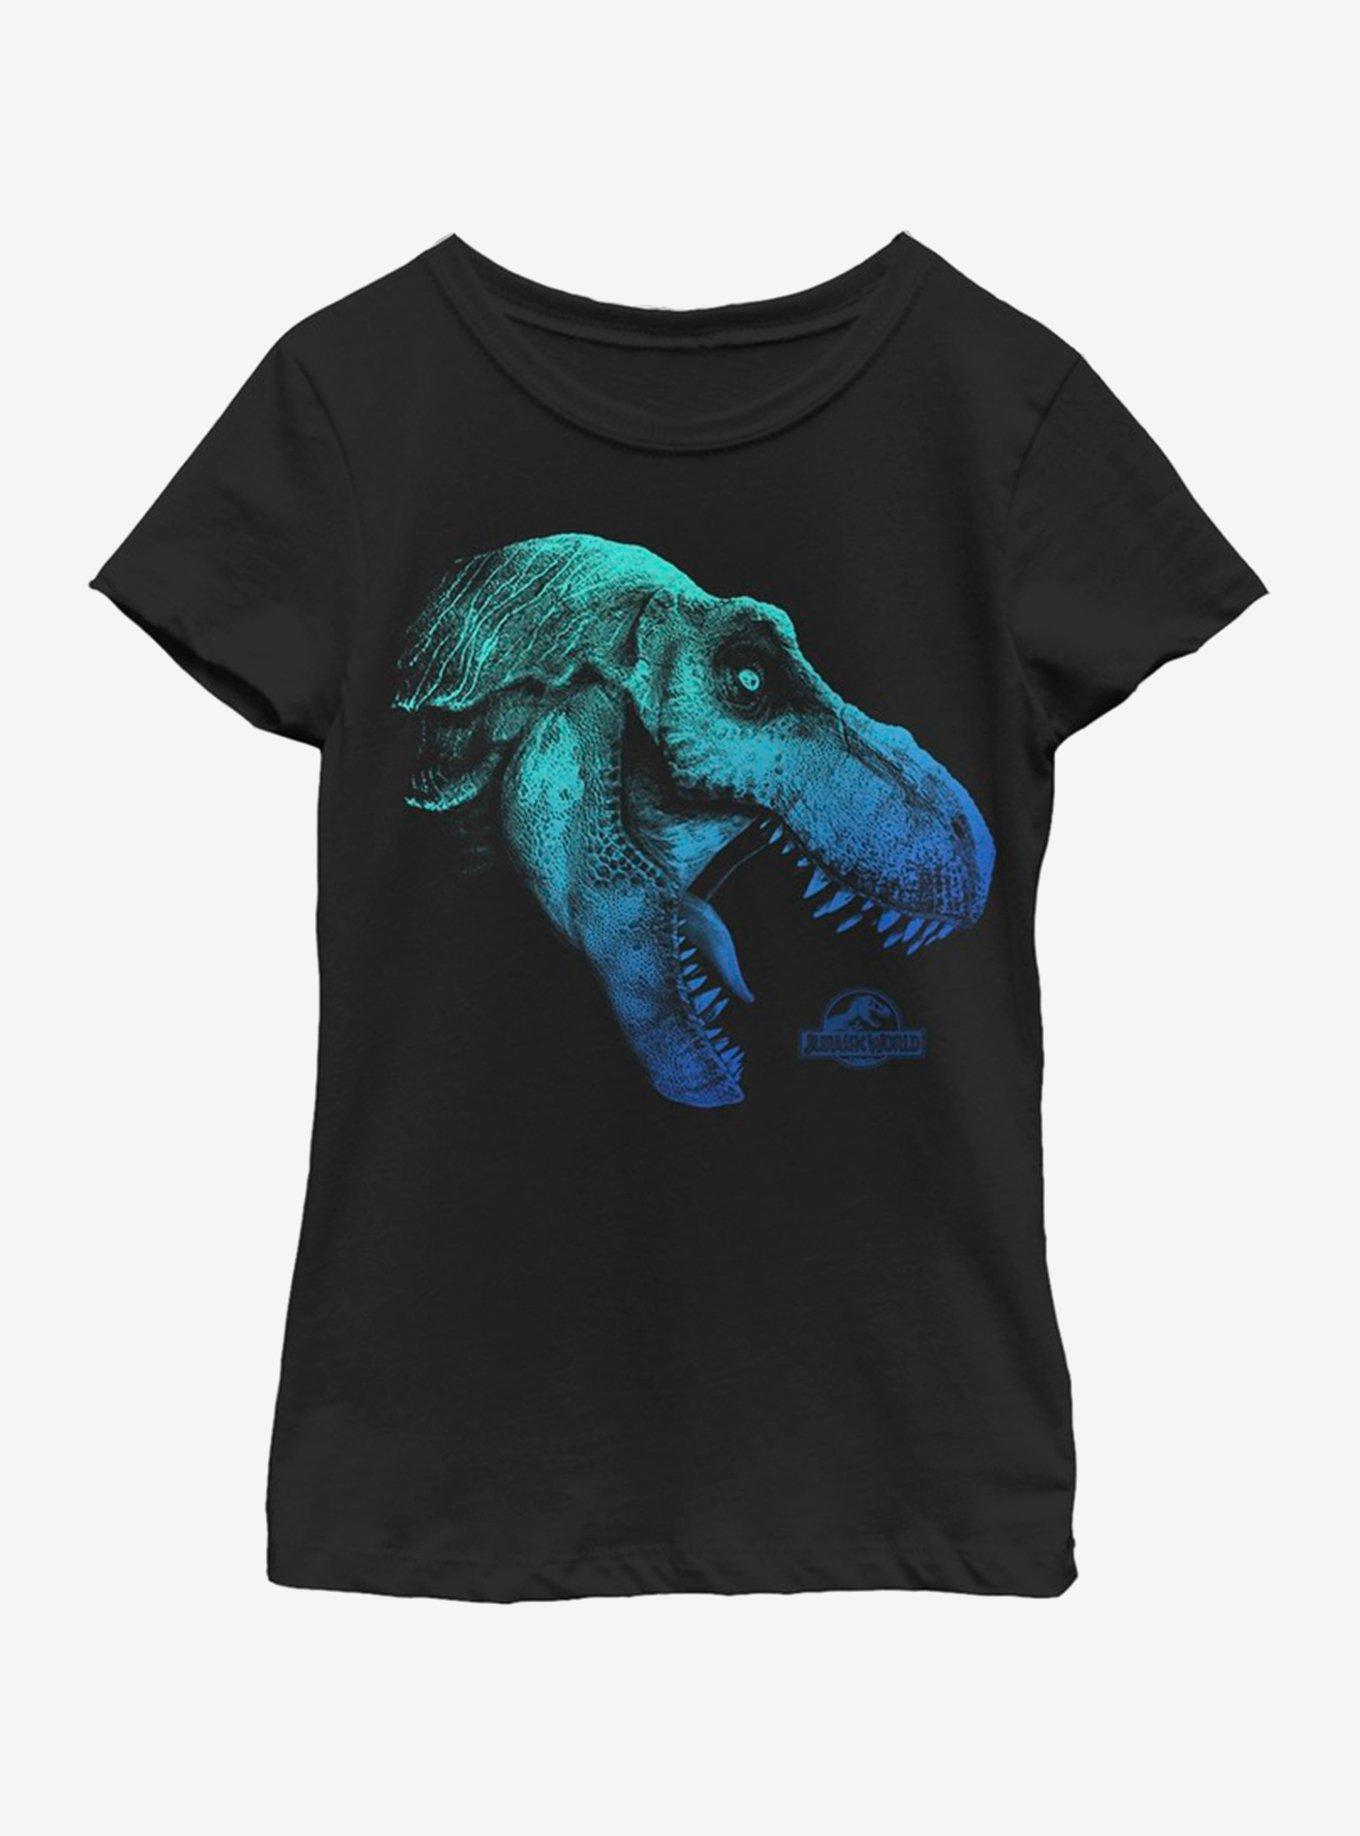 Jurassic Park Blue Bones Youth Girls T-Shirt, BLACK, hi-res